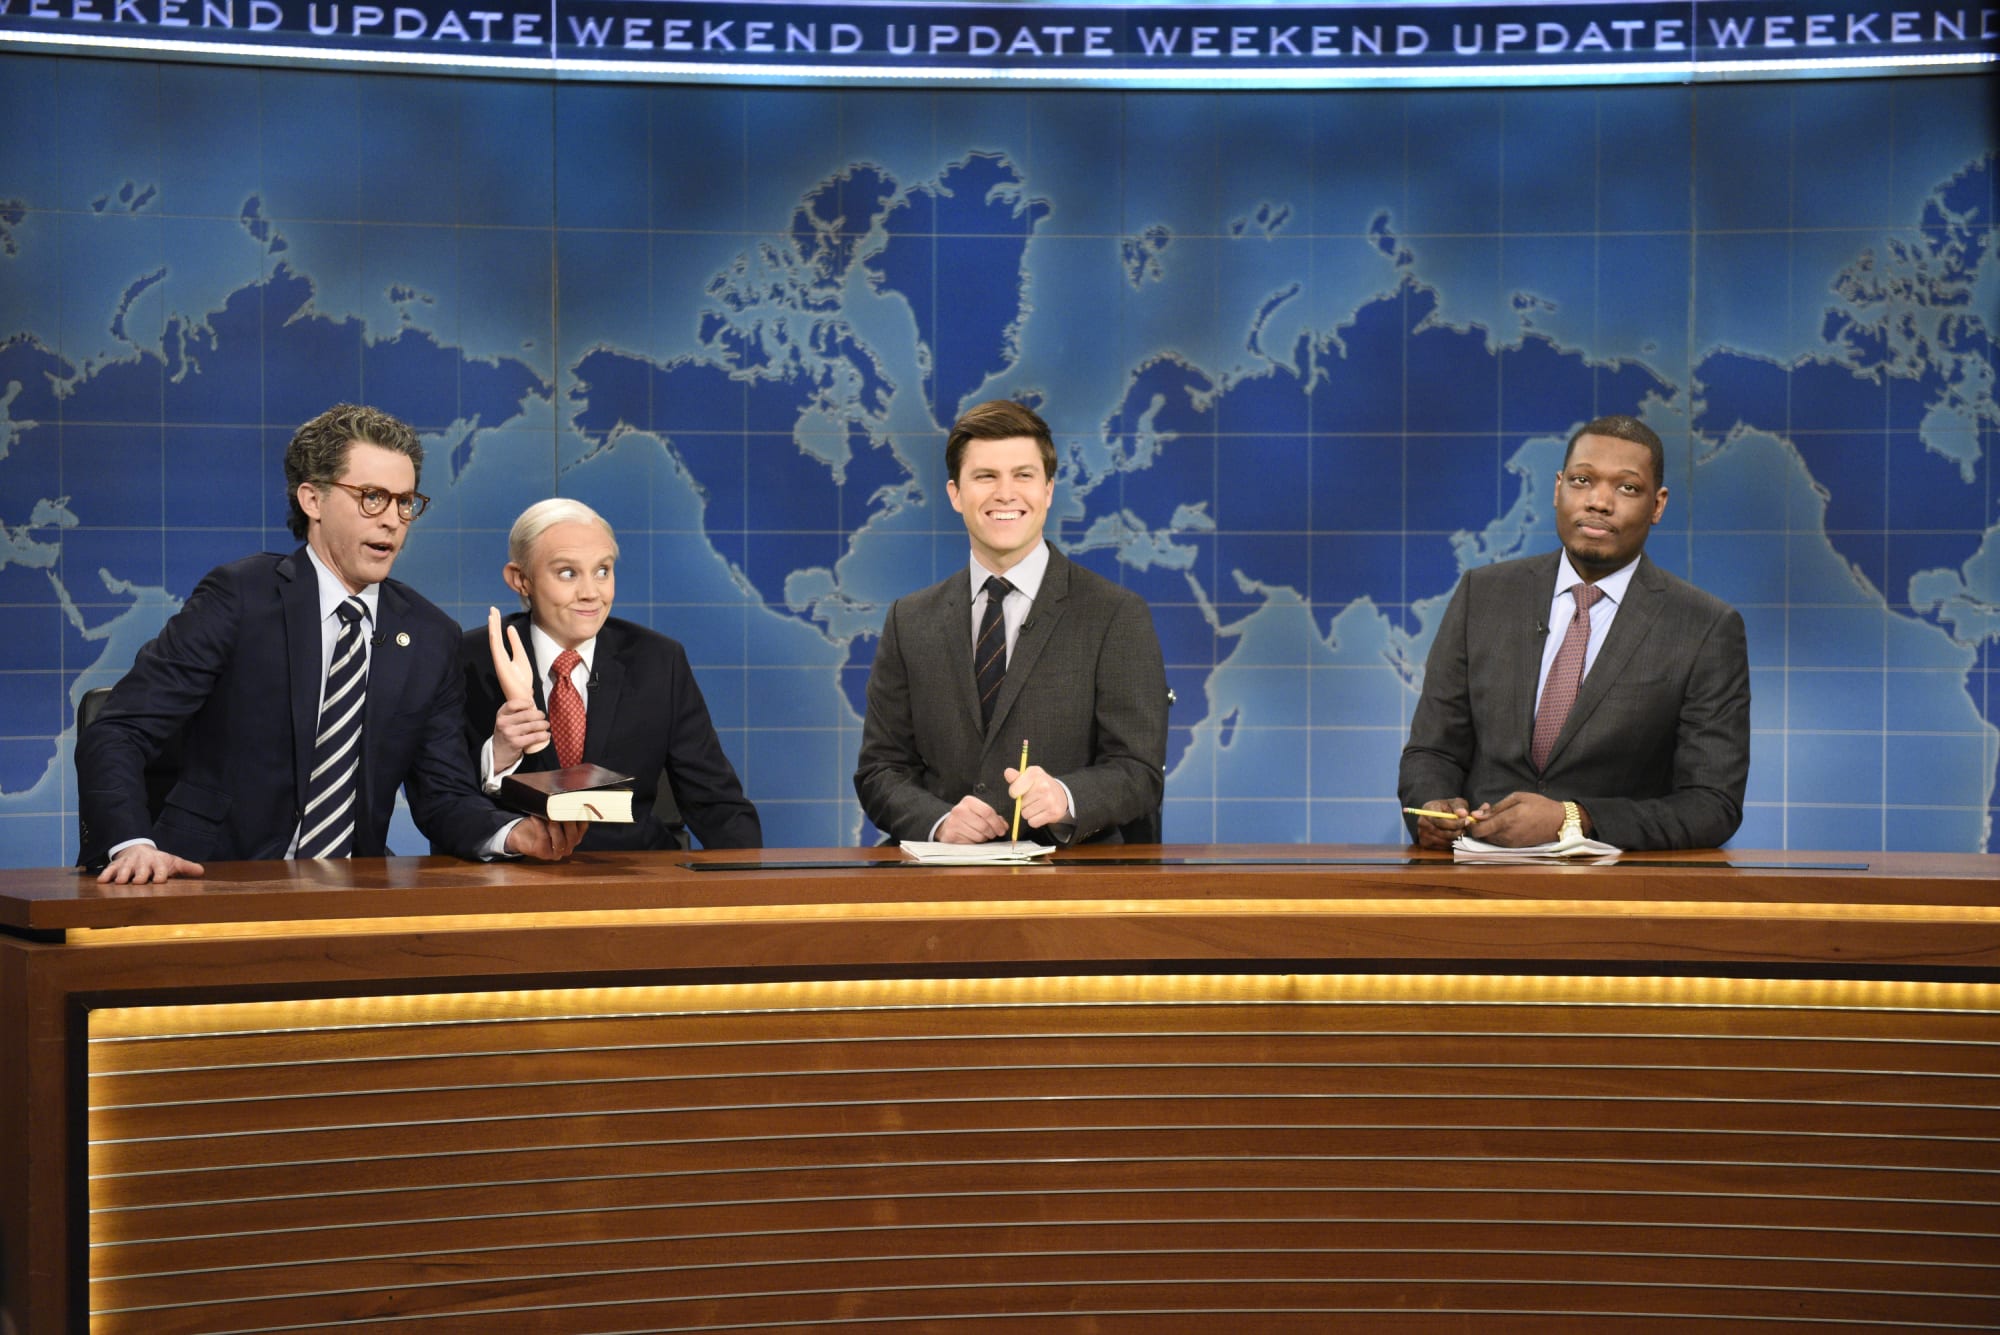 Watch Saturday Night Live Weekend Update season premiere live stream